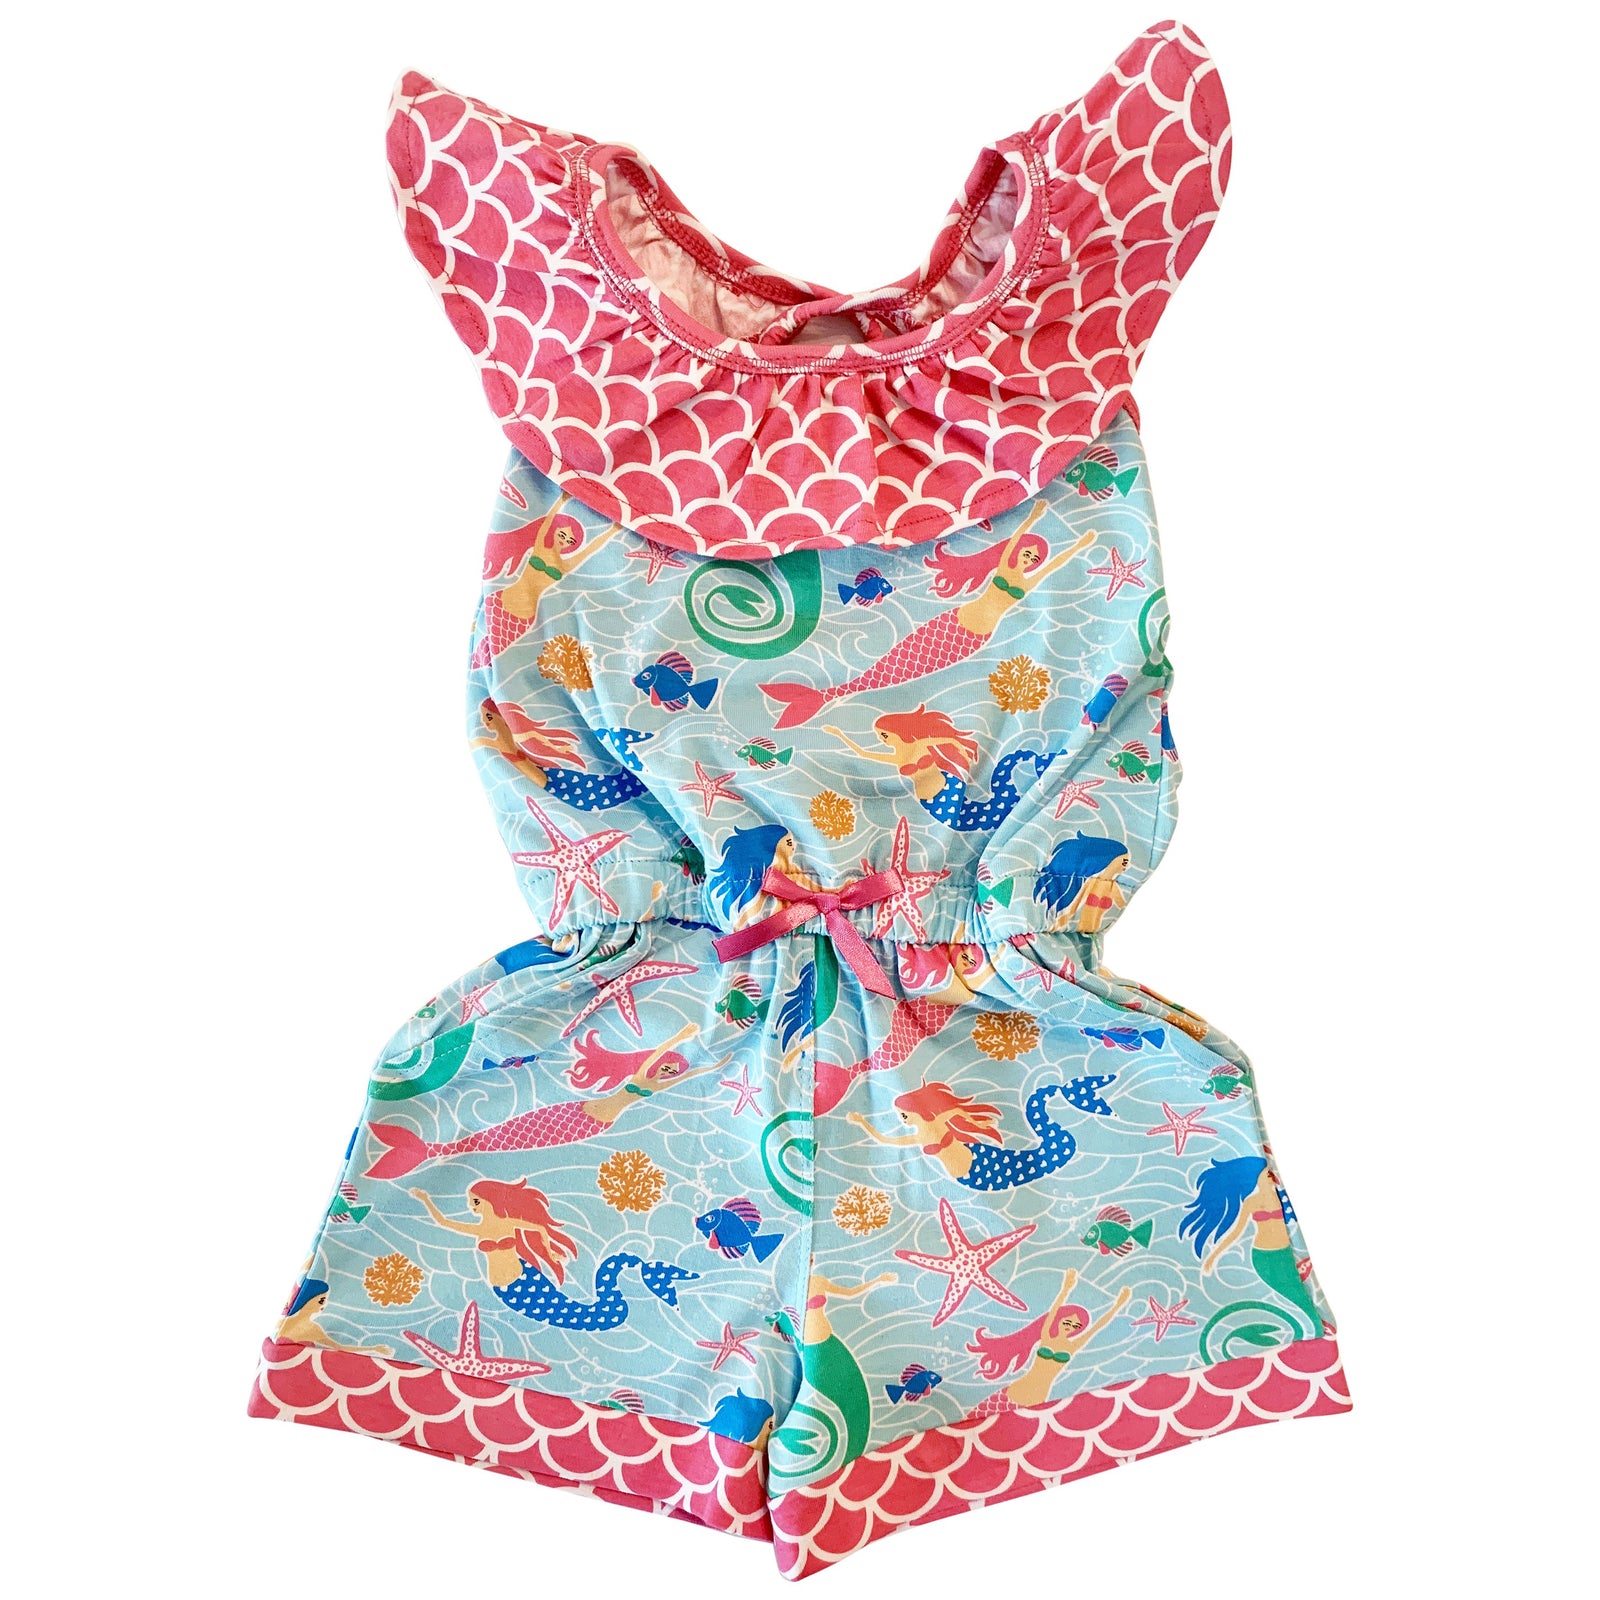 Nautical Mermaid Romper Spring Summer Little Big Girls Jumpsuit Clothing Sizes 2/3T - 11/12 by AnnLoren